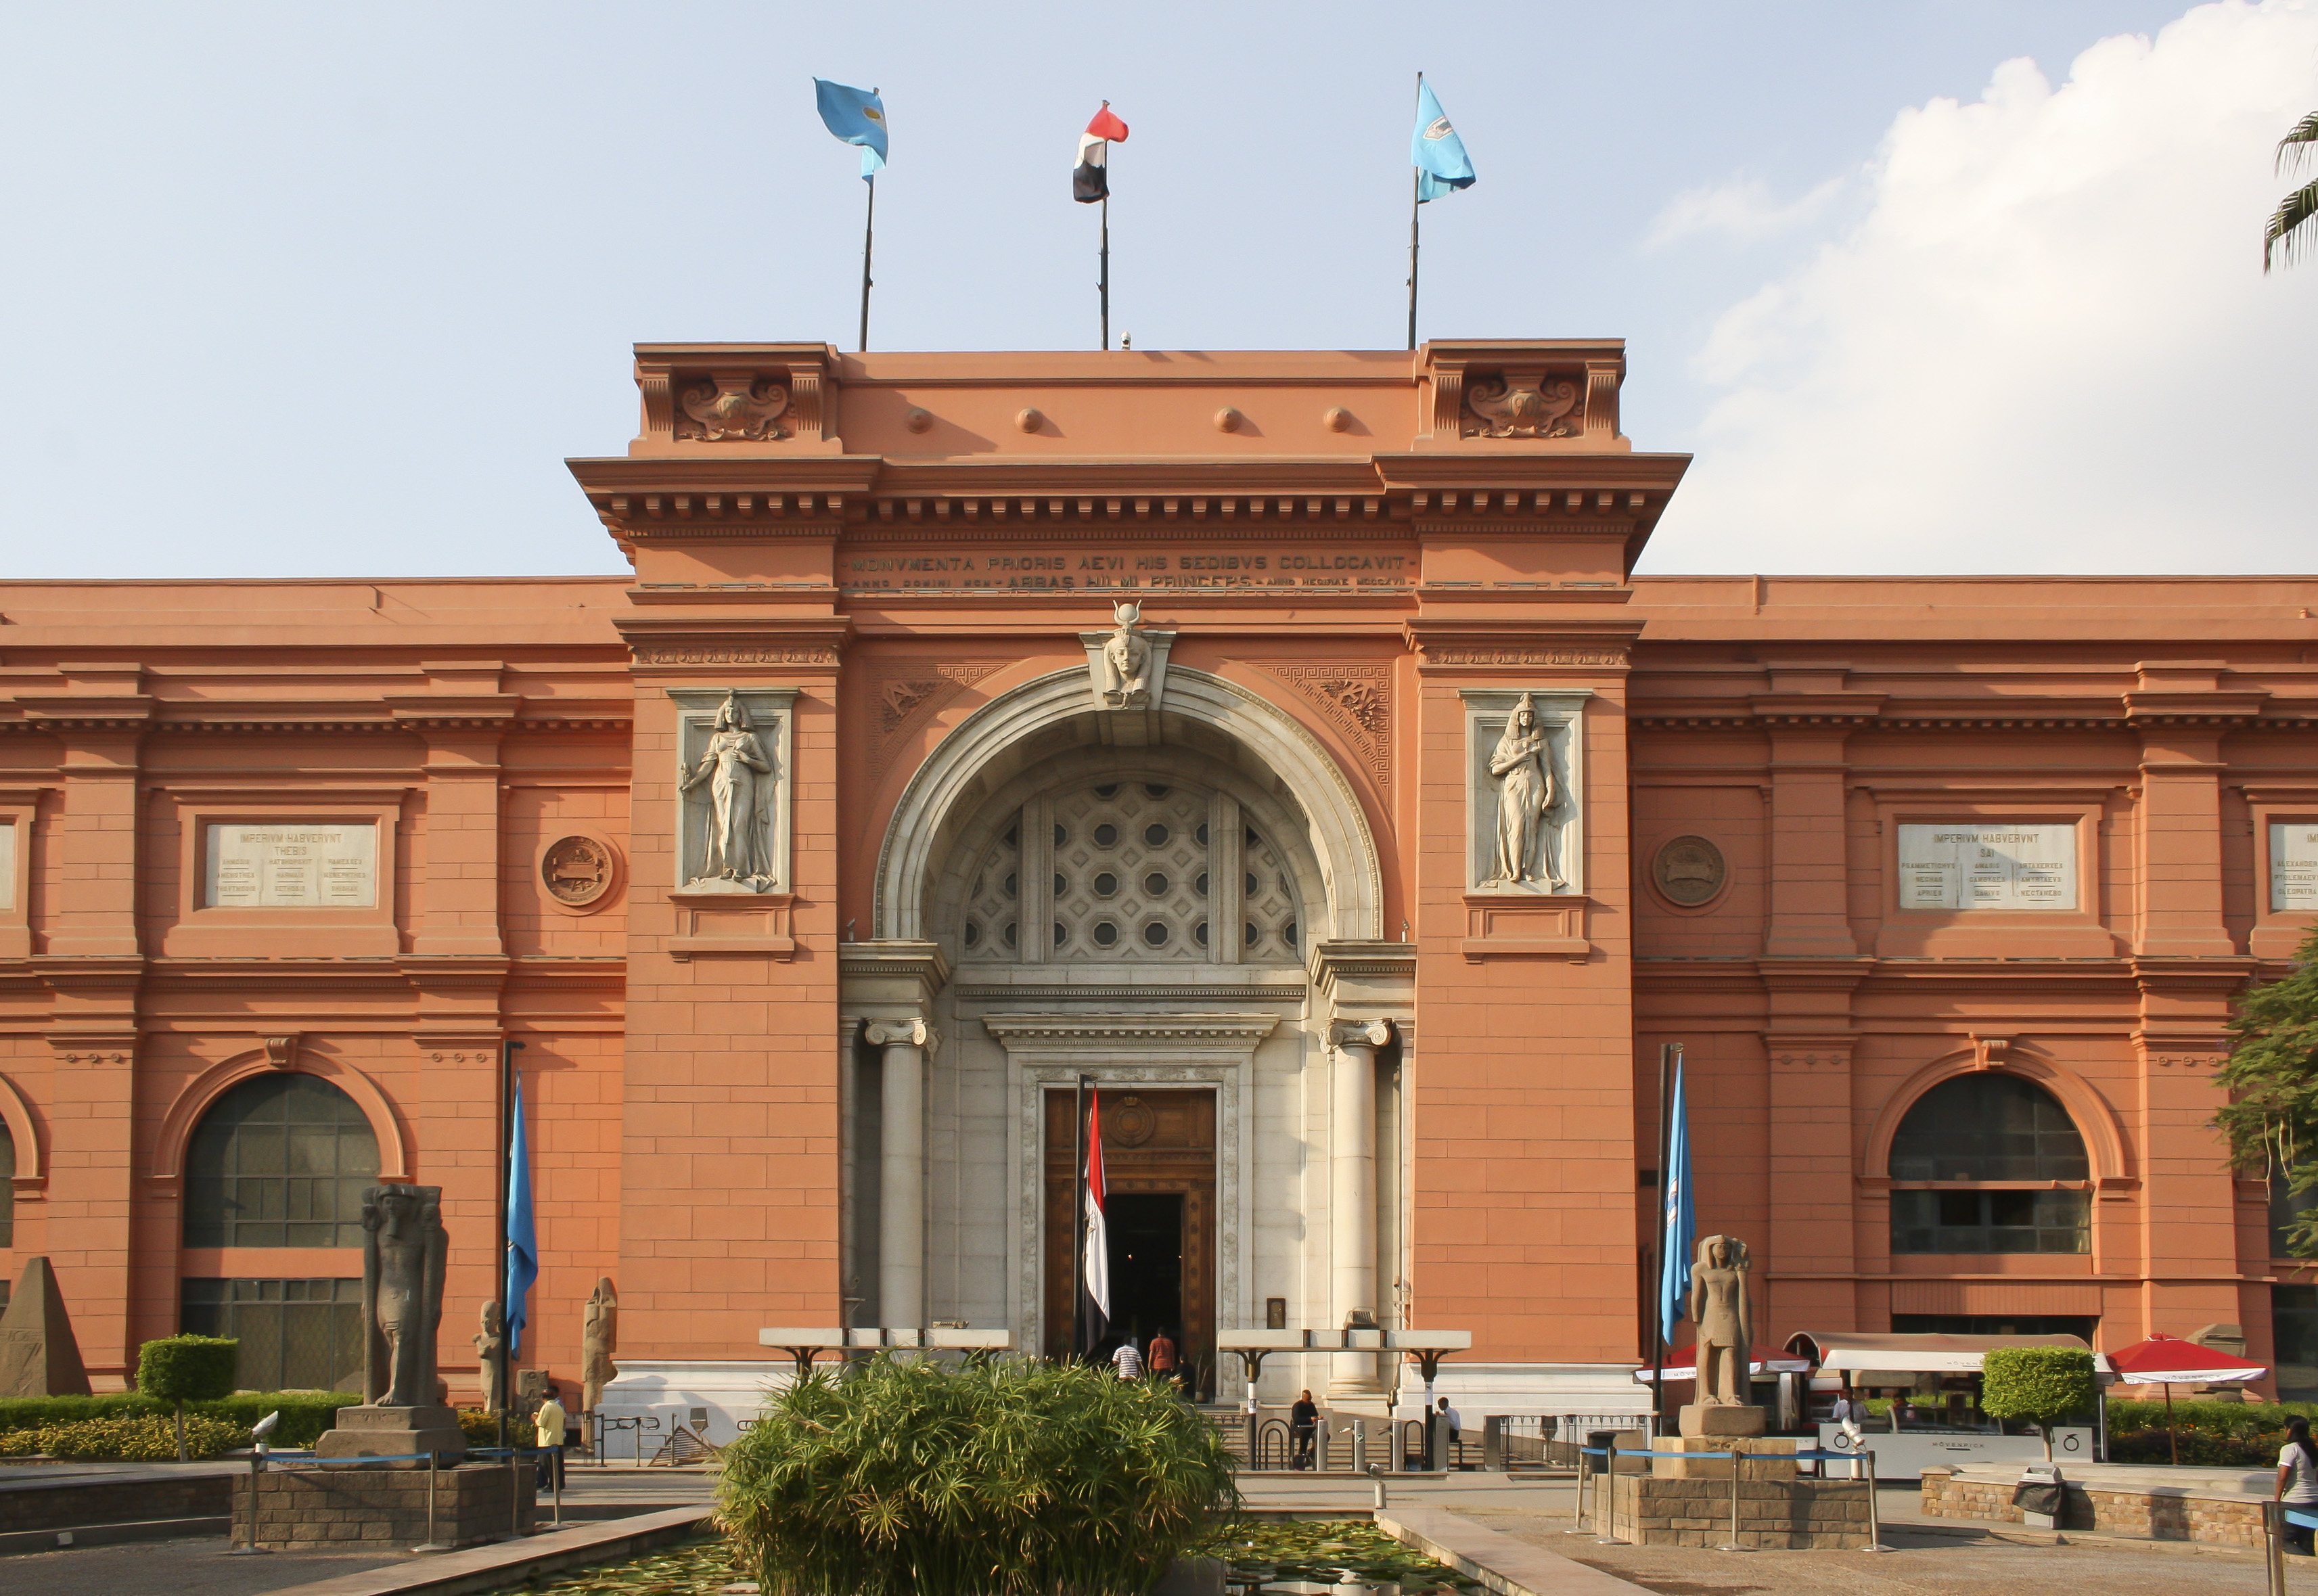 Facade of the Egyptian Museum, Tahrir Square, Cairo, Egypt1